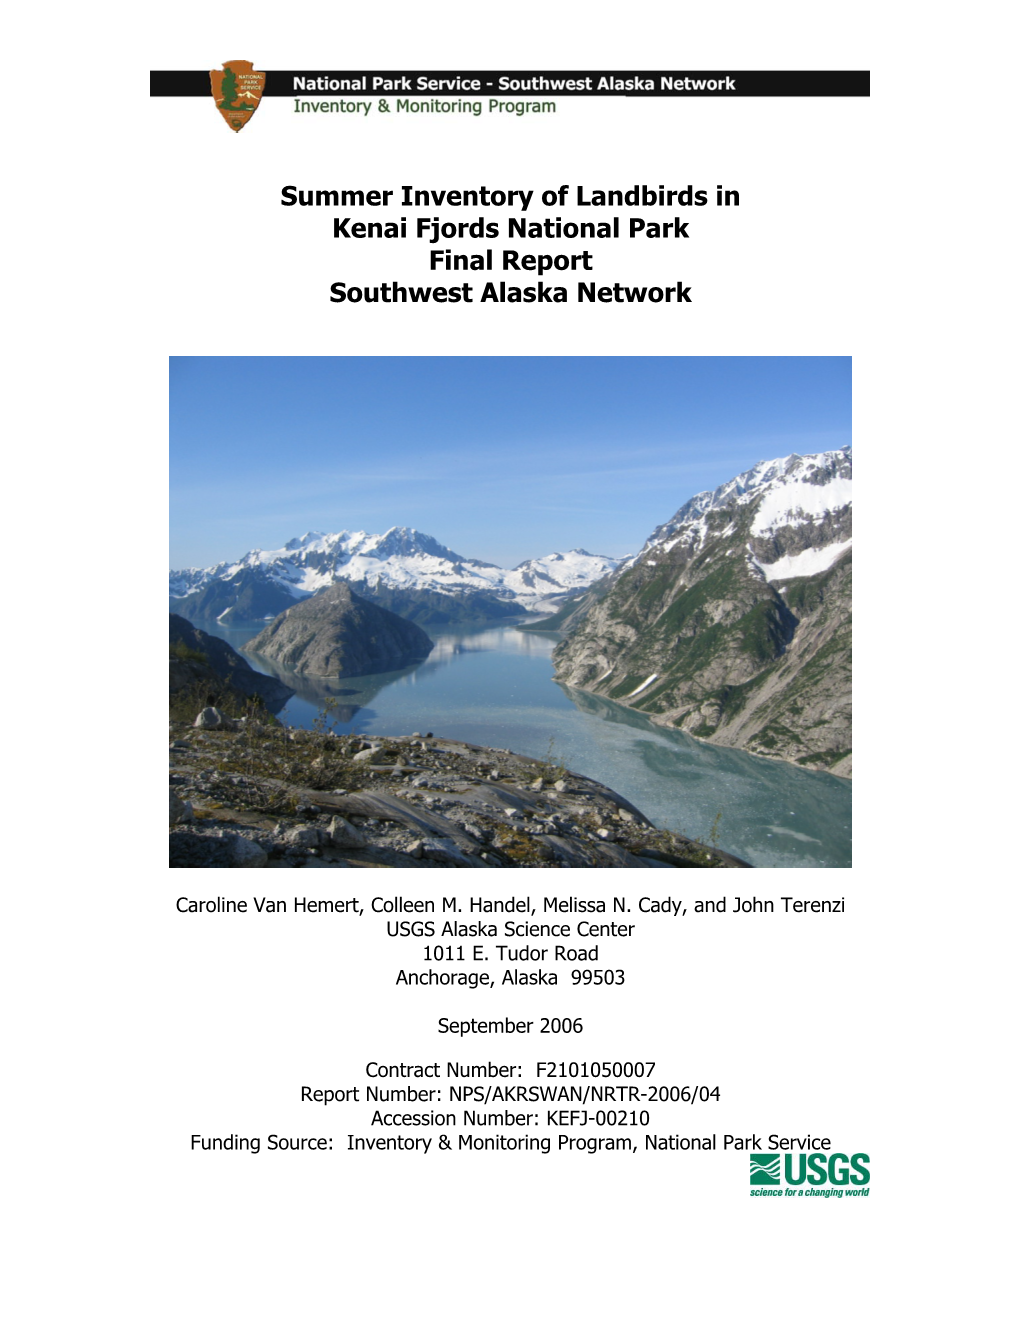 Summer Inventory of Landbirds in Kenai Fjords National Park Final Report Southwest Alaska Network